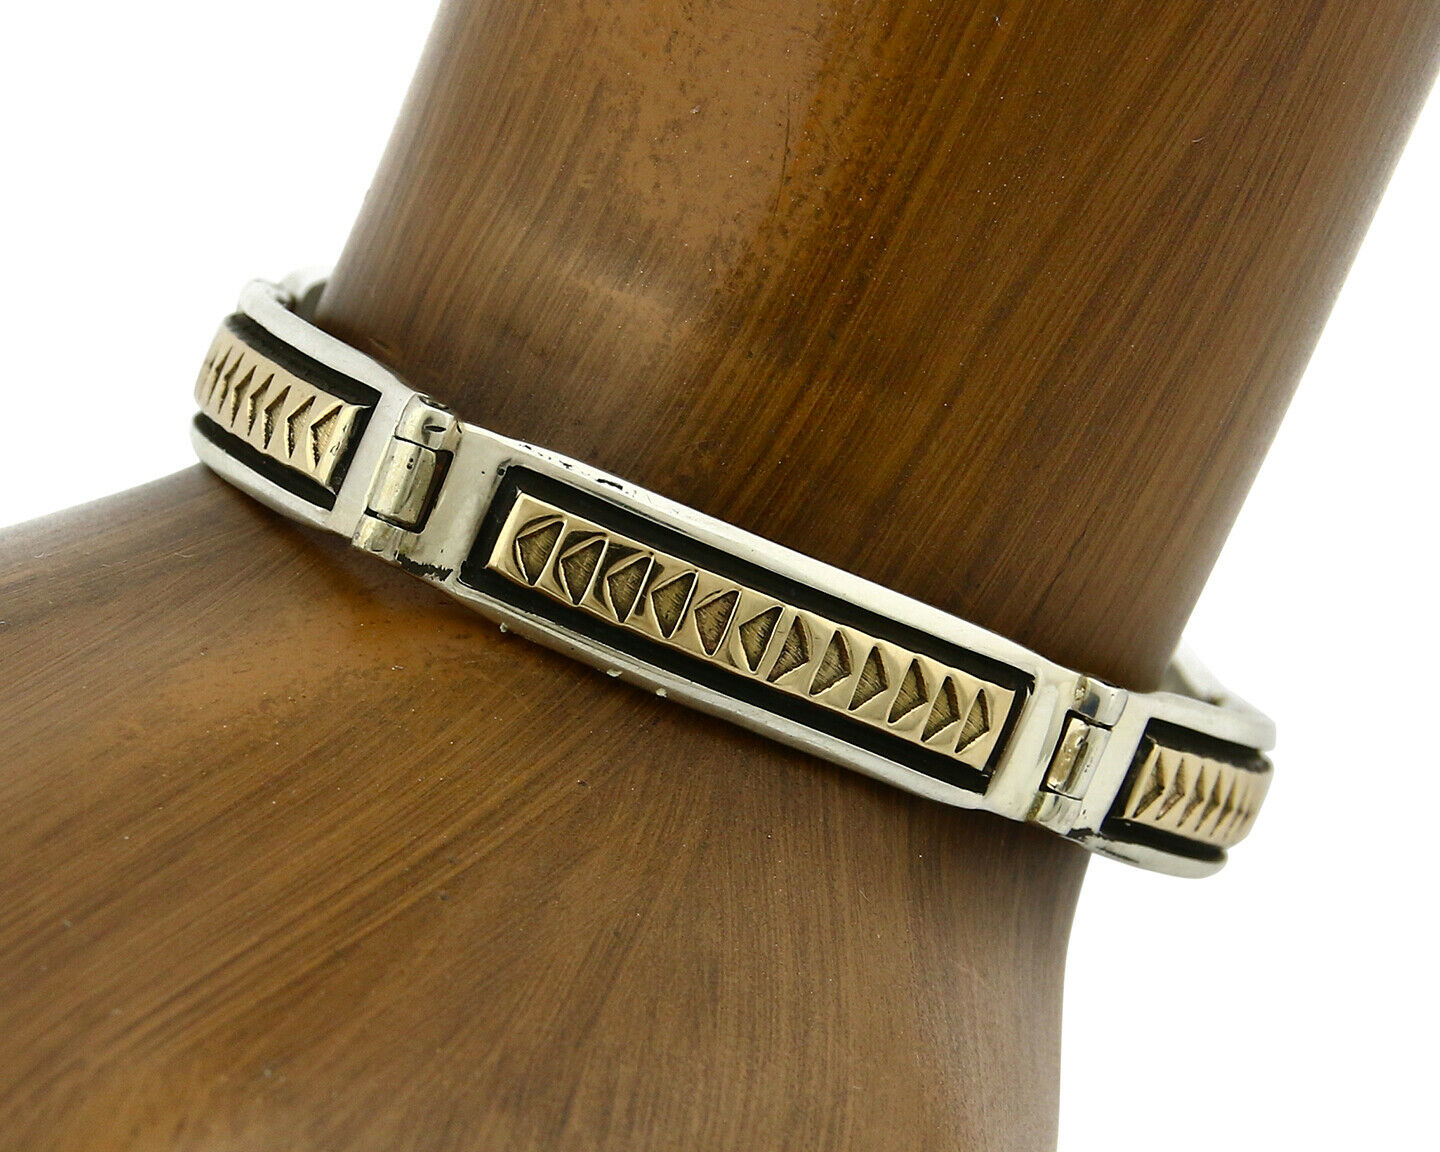 Navajo Bracelet Handmade .925 Silver & 14k SOLID Yellow Gold Signed JK C.85-92